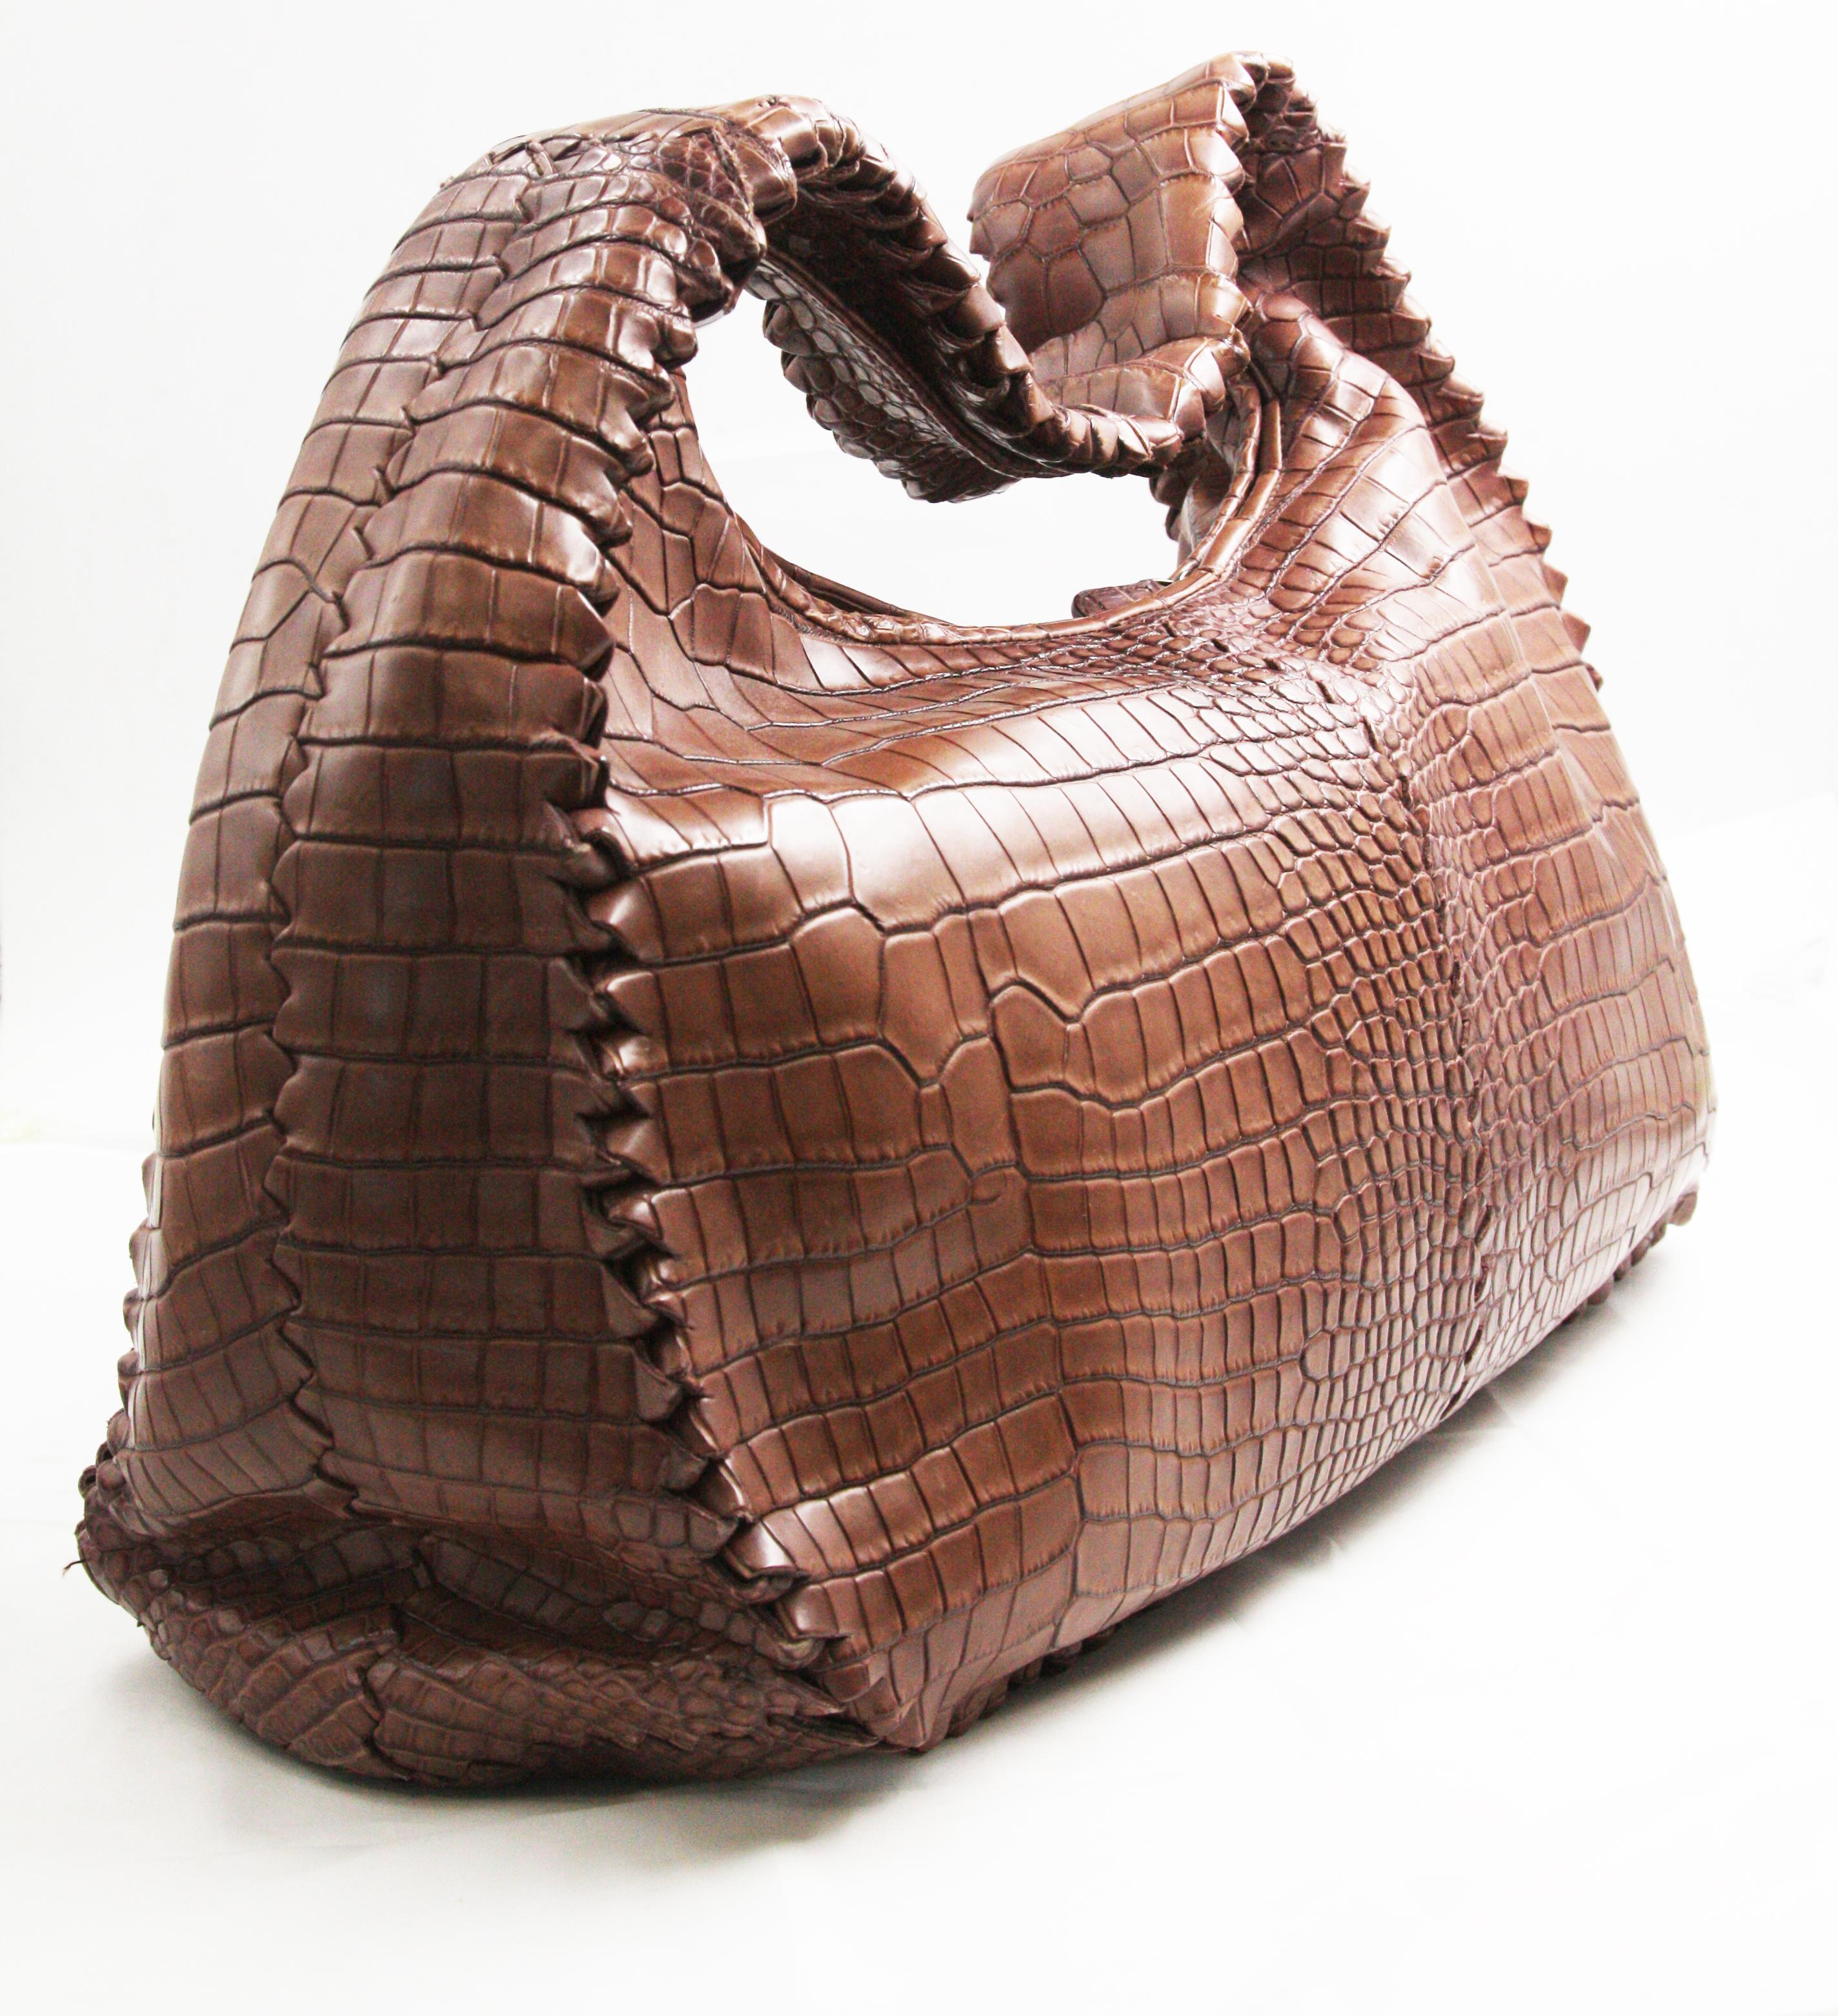 Bottega Veneta brown Crocodile Skin shoulder bag

Includes: Dustbag. original mirror.

